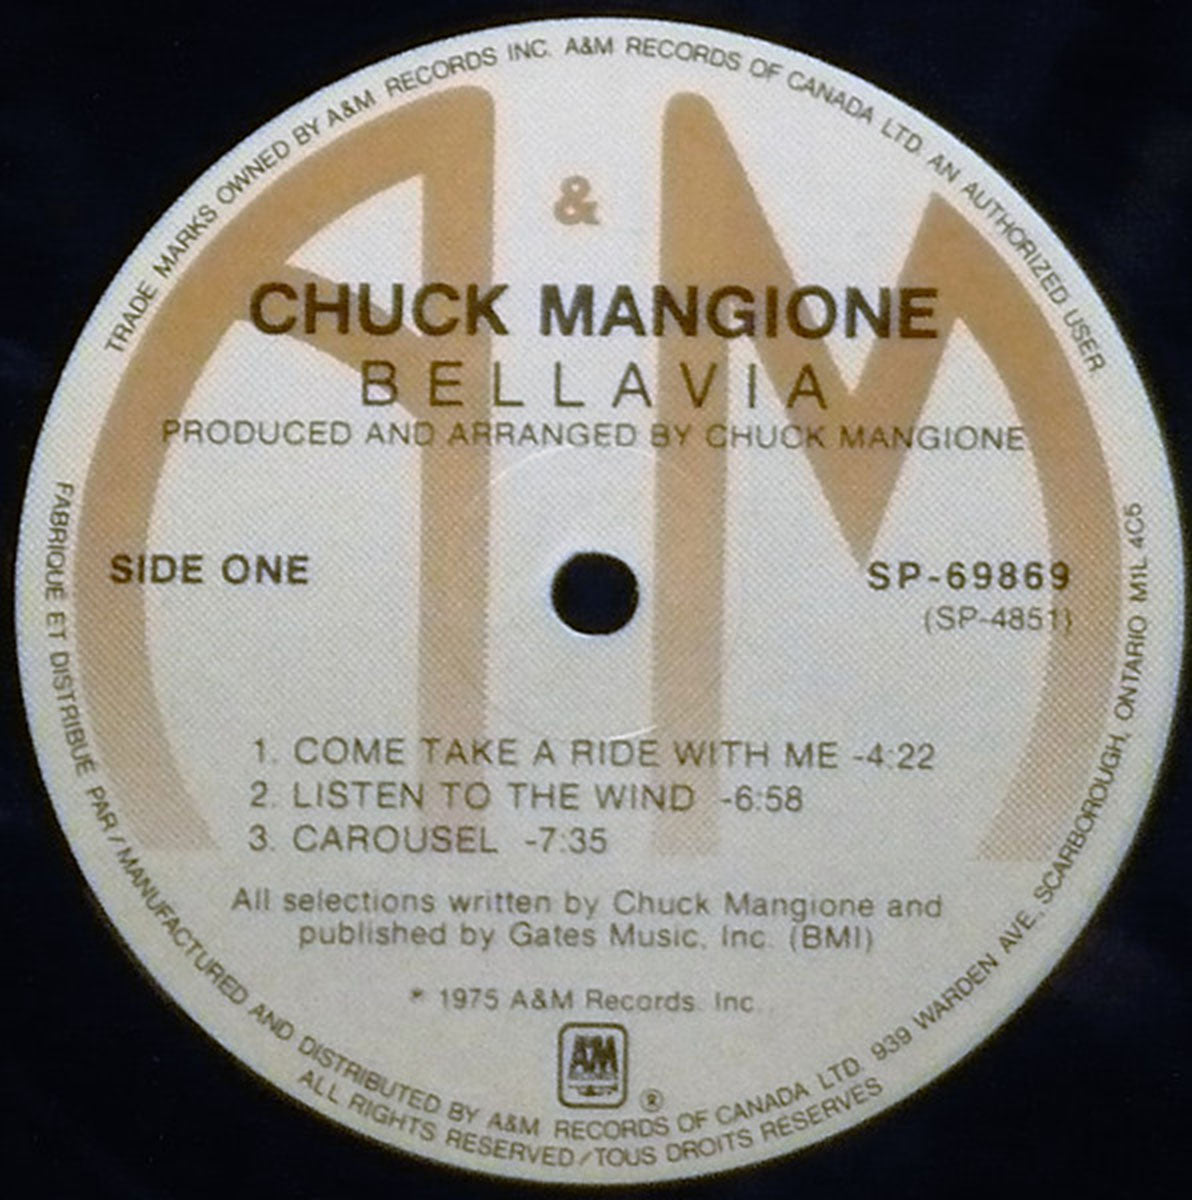 Chuck Mangione – Bellavia - 1975